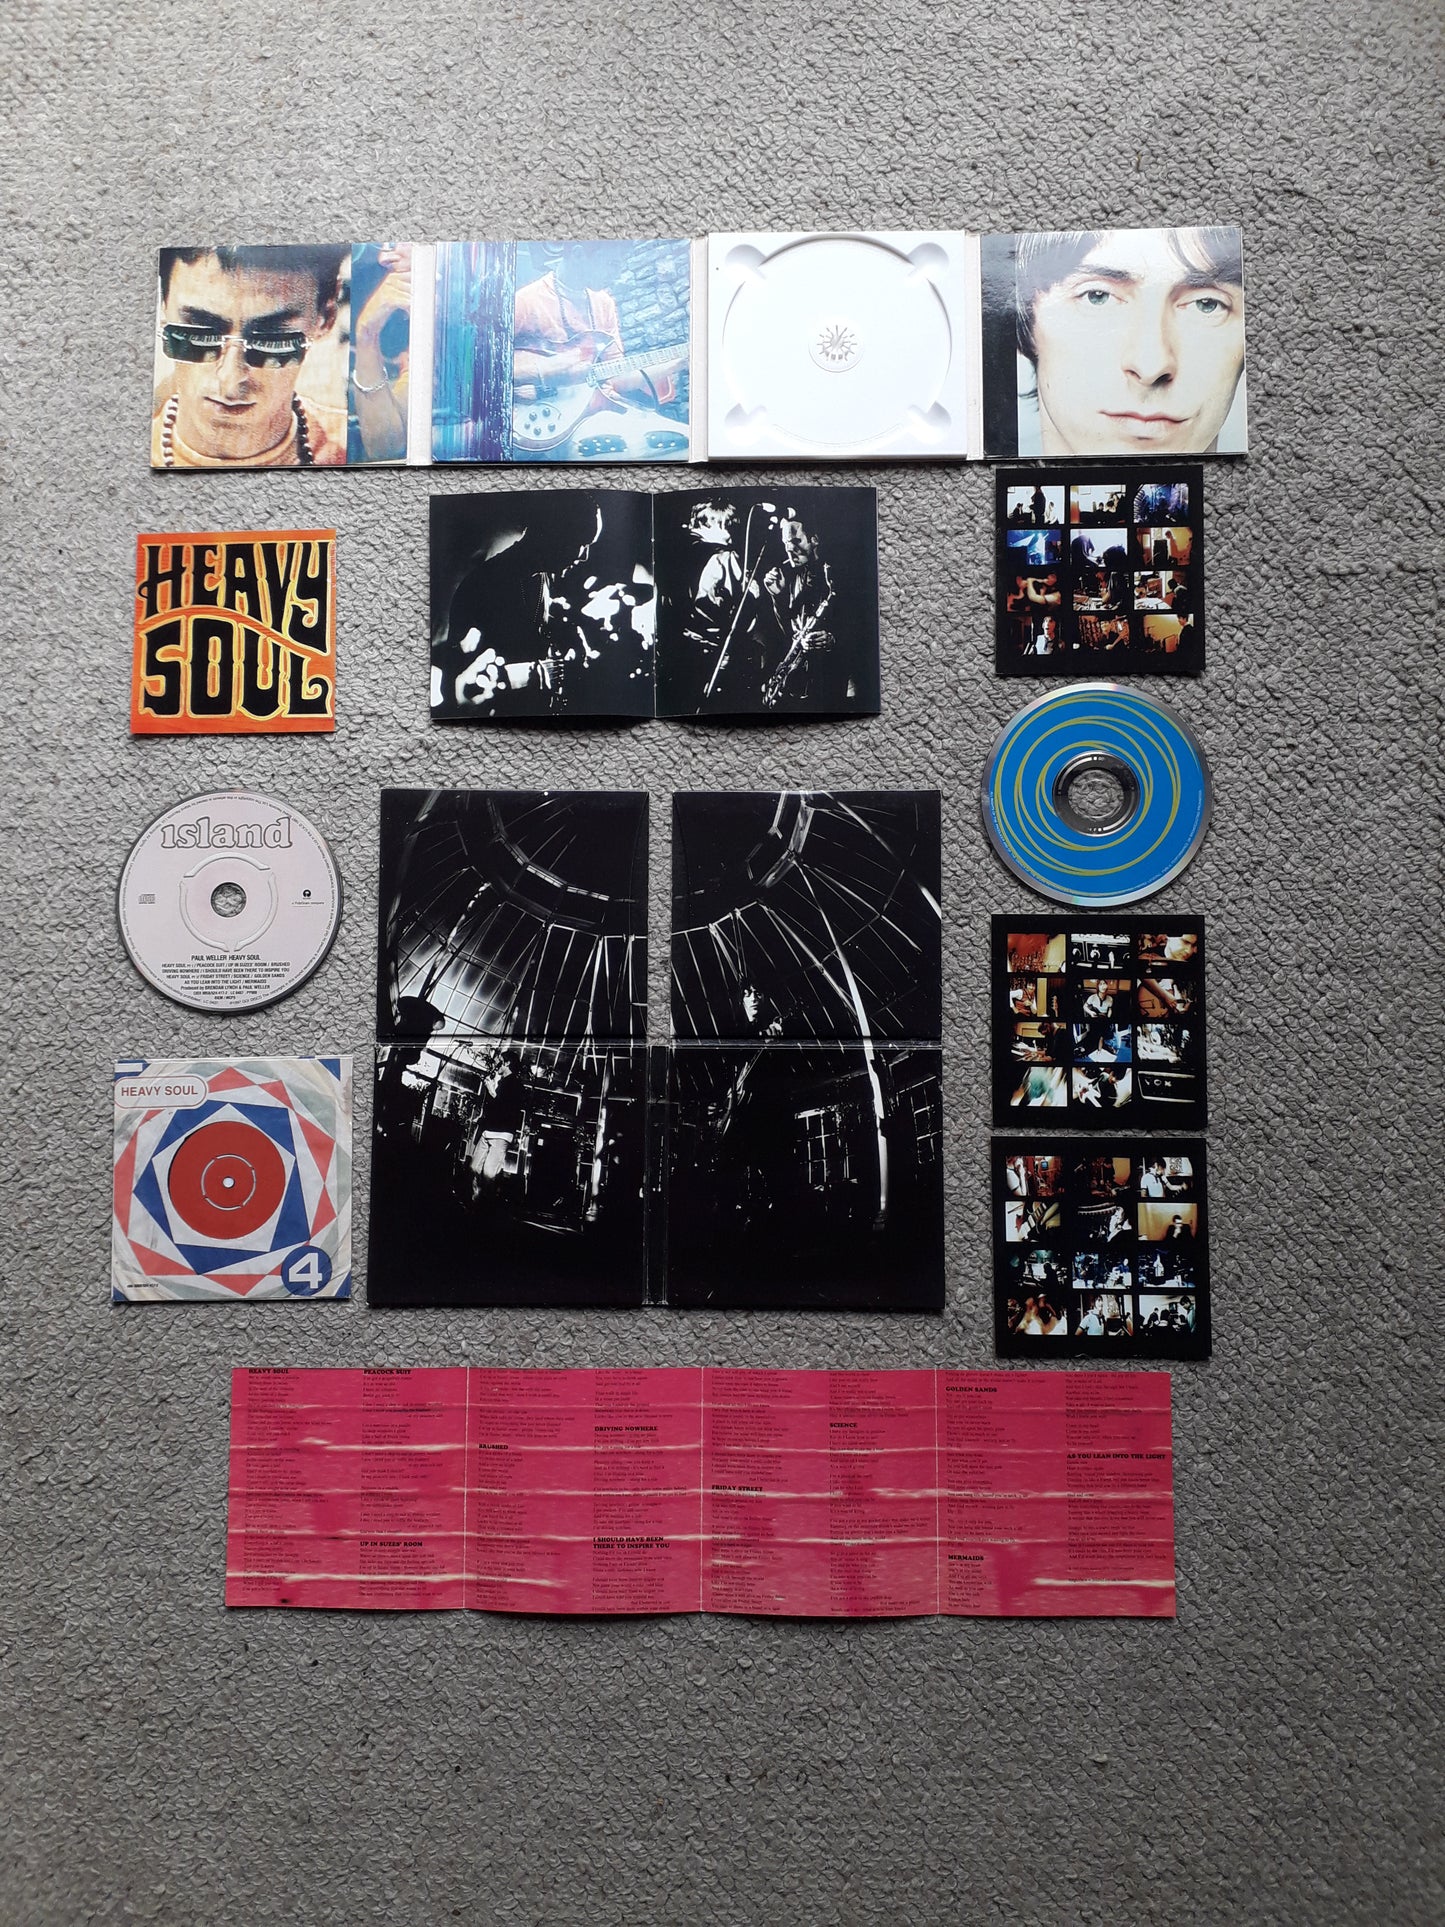 Paul Weller-Paul Weller & Heavy Soul Limited Edition Digipaks CD's X2